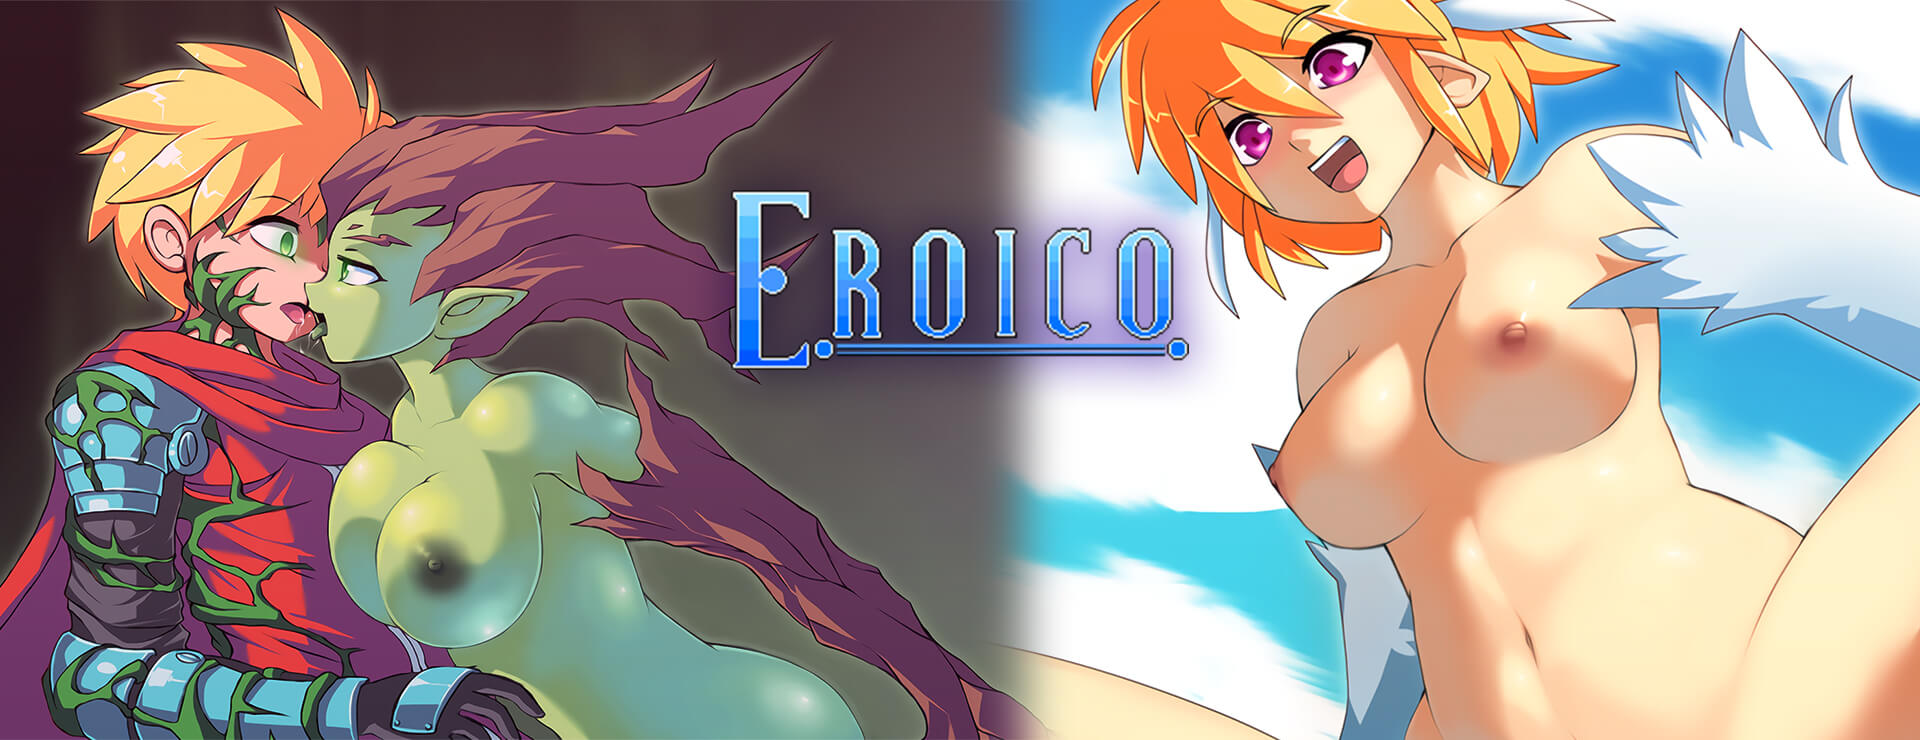 Eroico - Action Adventure Game